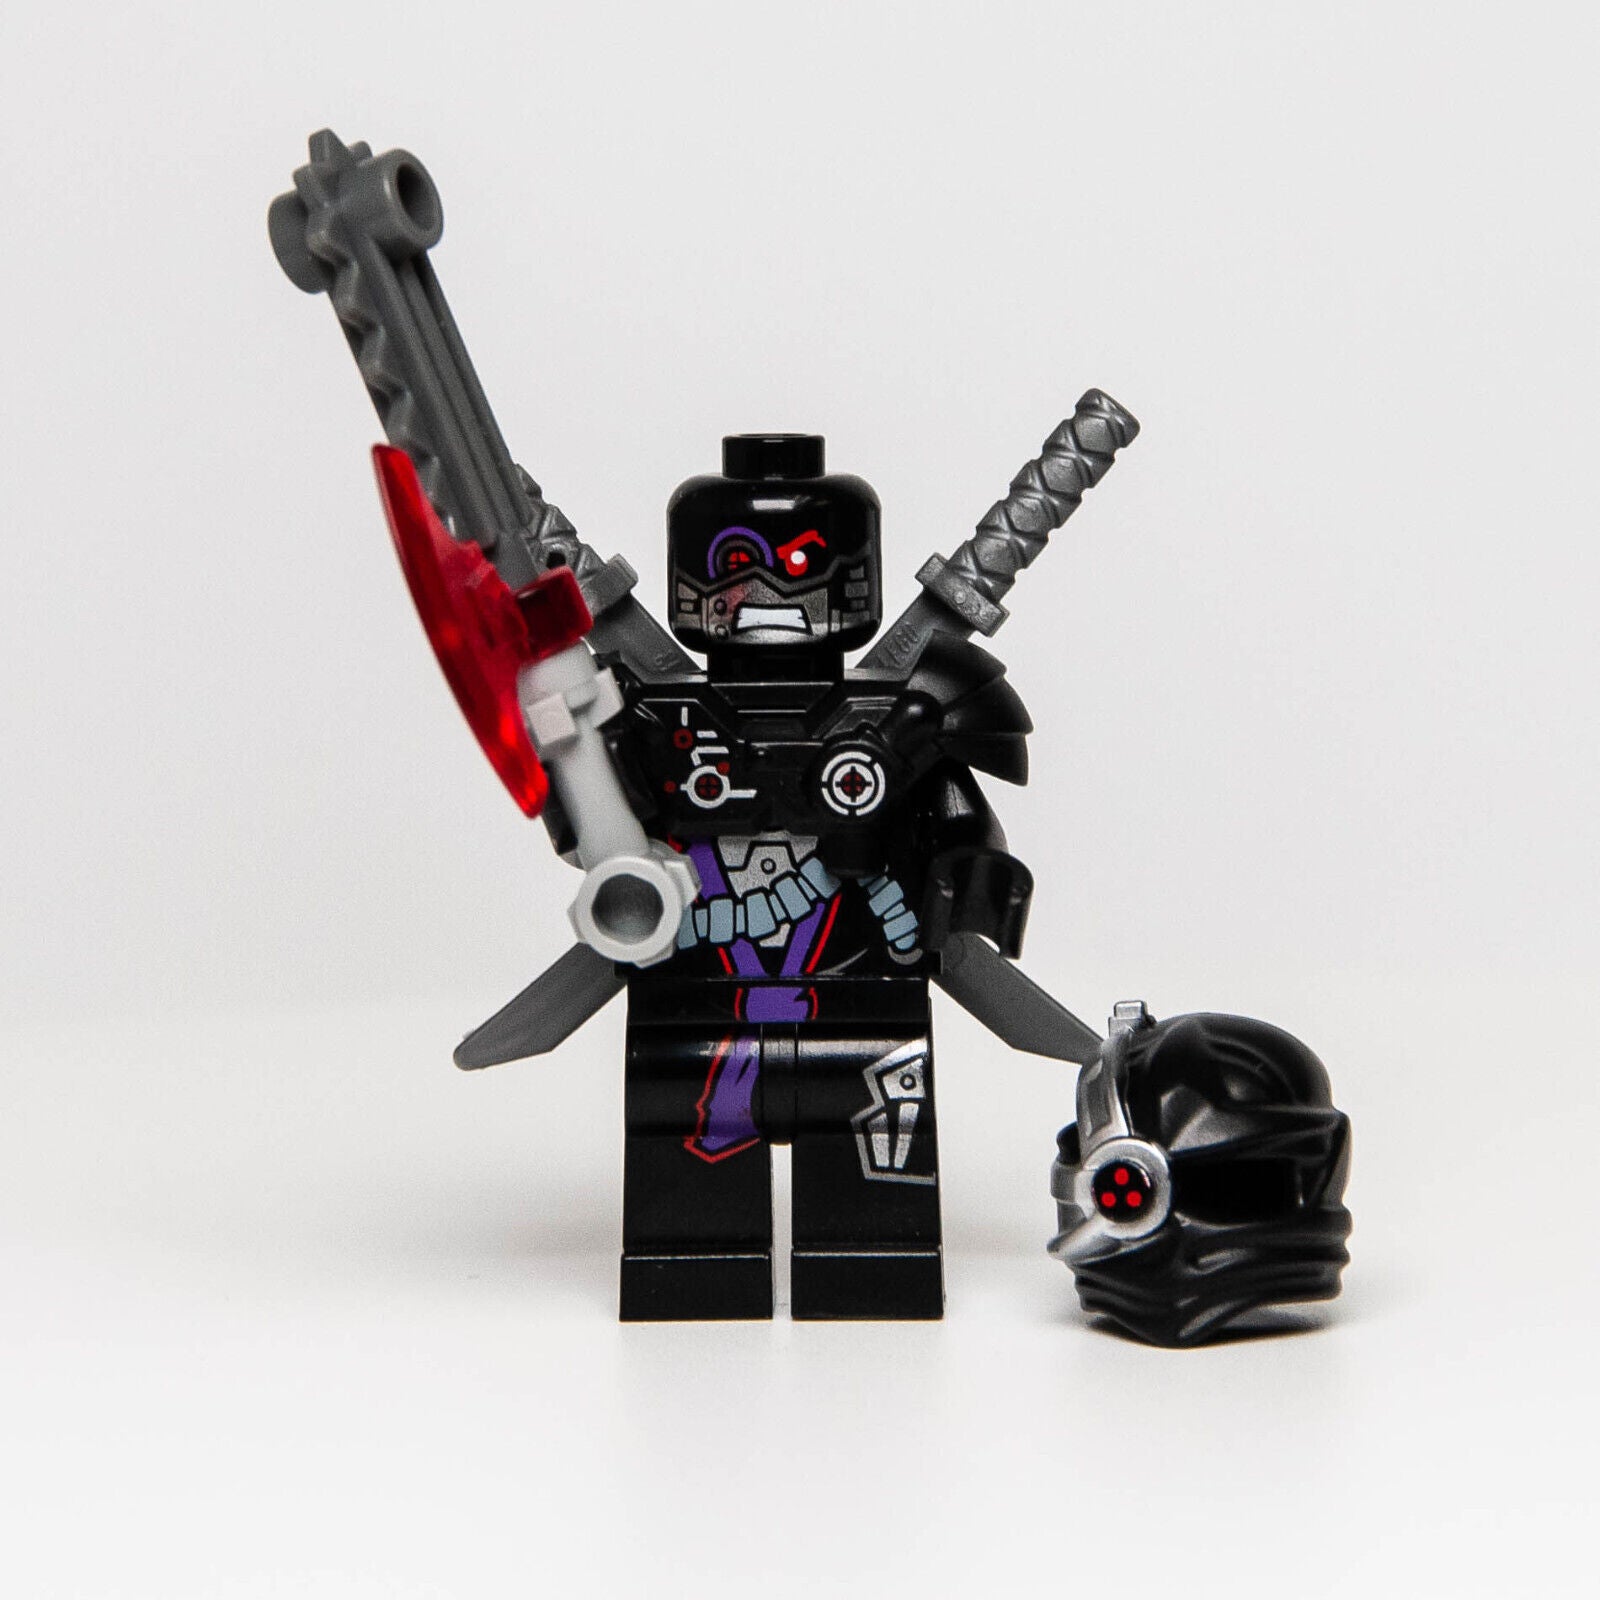 LEGO Ninjago General Cryptor Minifigure (njo092) 70725 with Swords and Saw